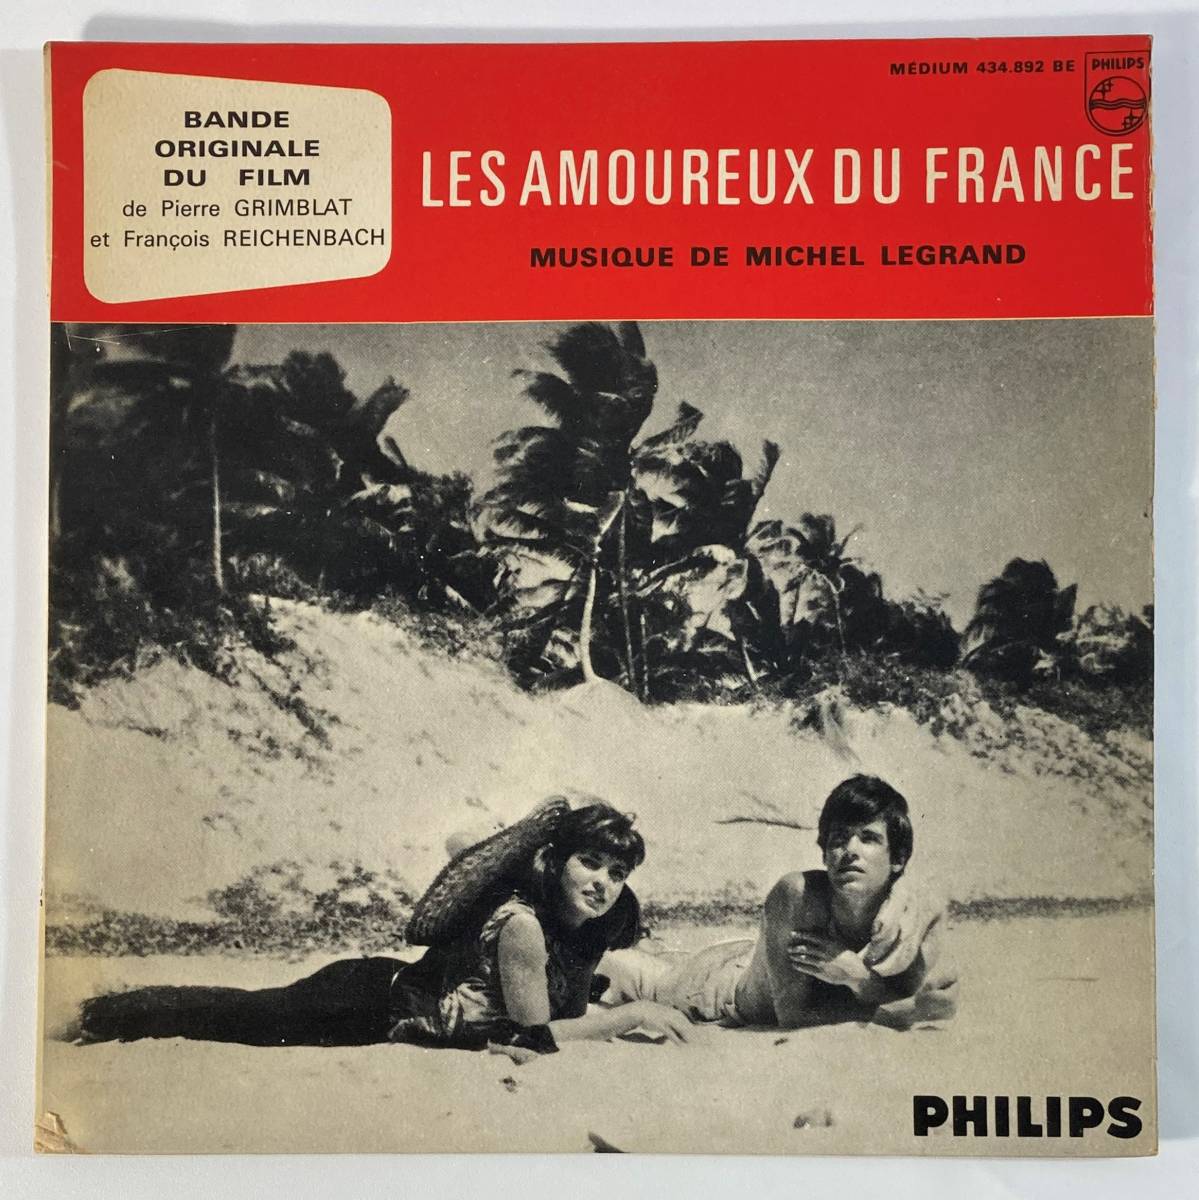 Les amourex du france (1963) Michel * legrand . record EP Philips 434.892 BE